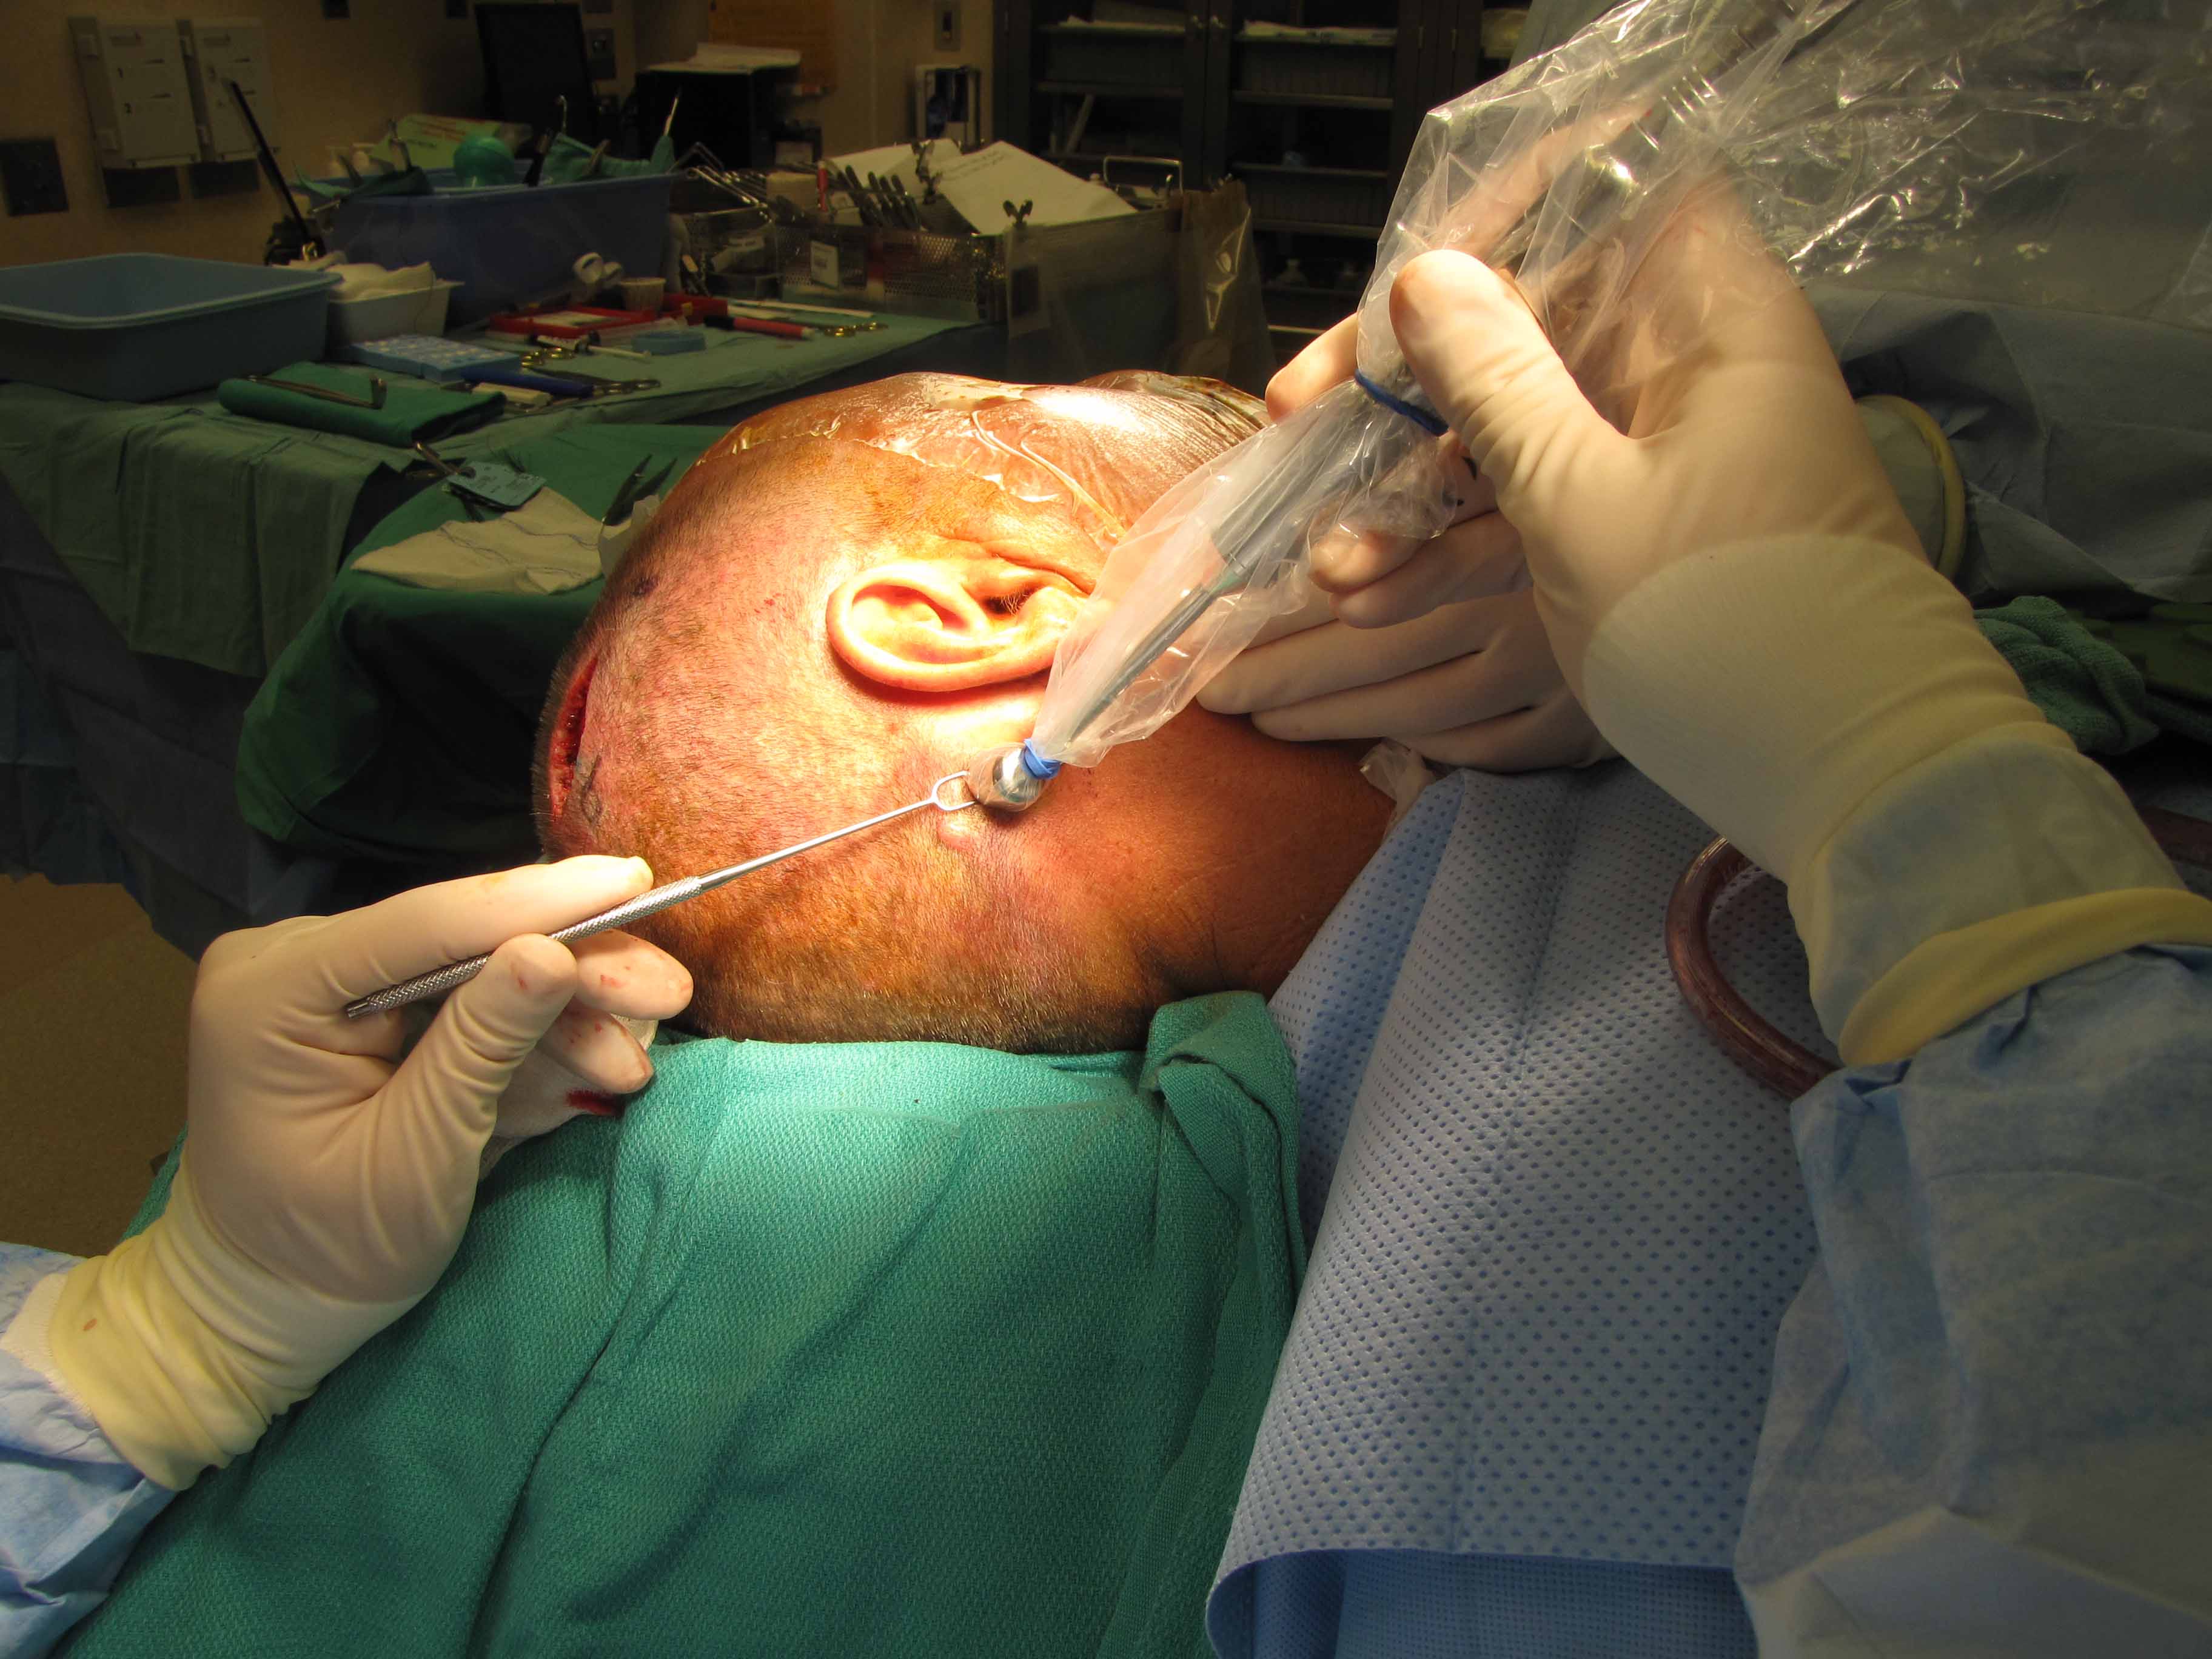 Case Example Sentinel Lymph Node Biopsy | Iowa Head and Neck Protocols